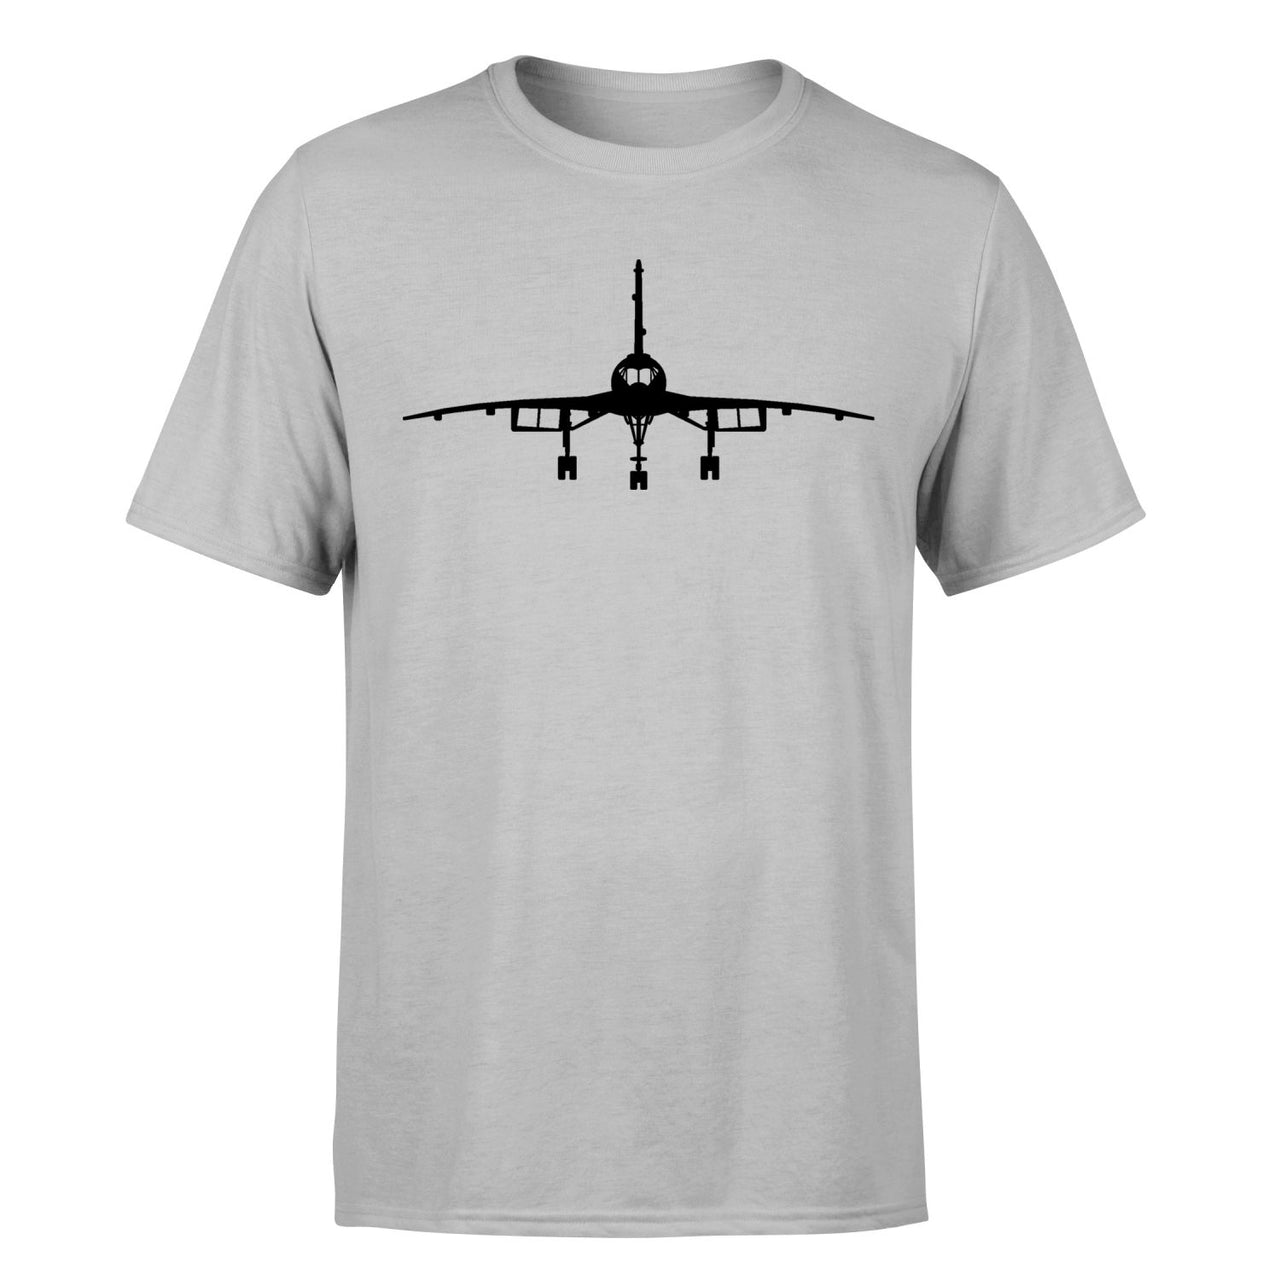 Concorde Silhouette Designed T-Shirts